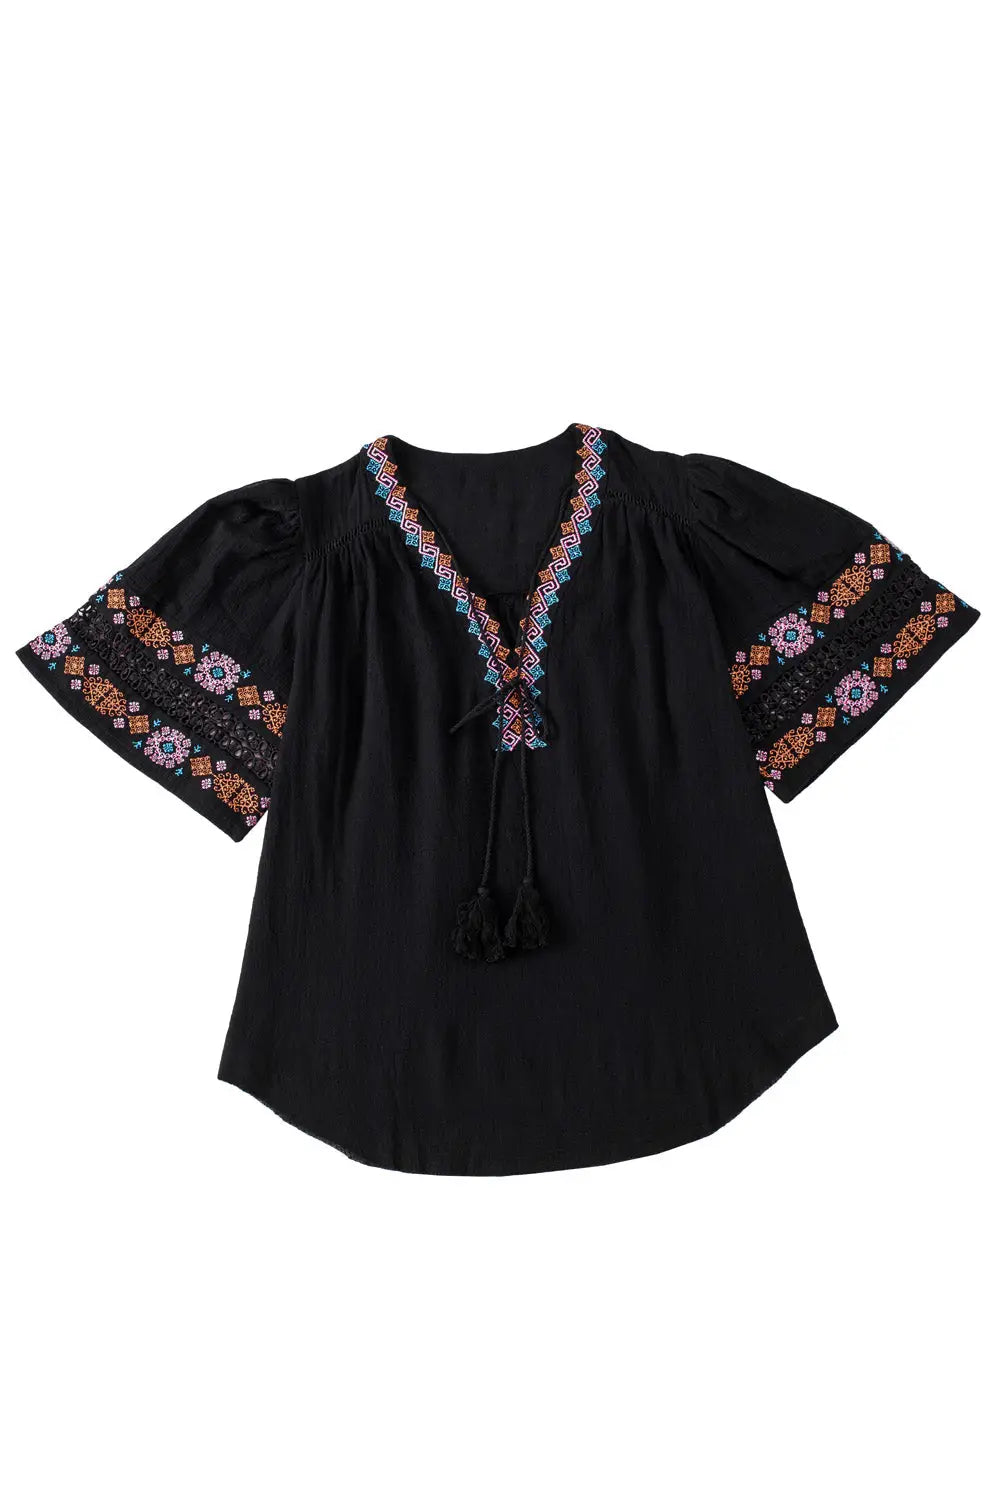 Black tassel drawstring embroidered half sleeve v neck top - tops